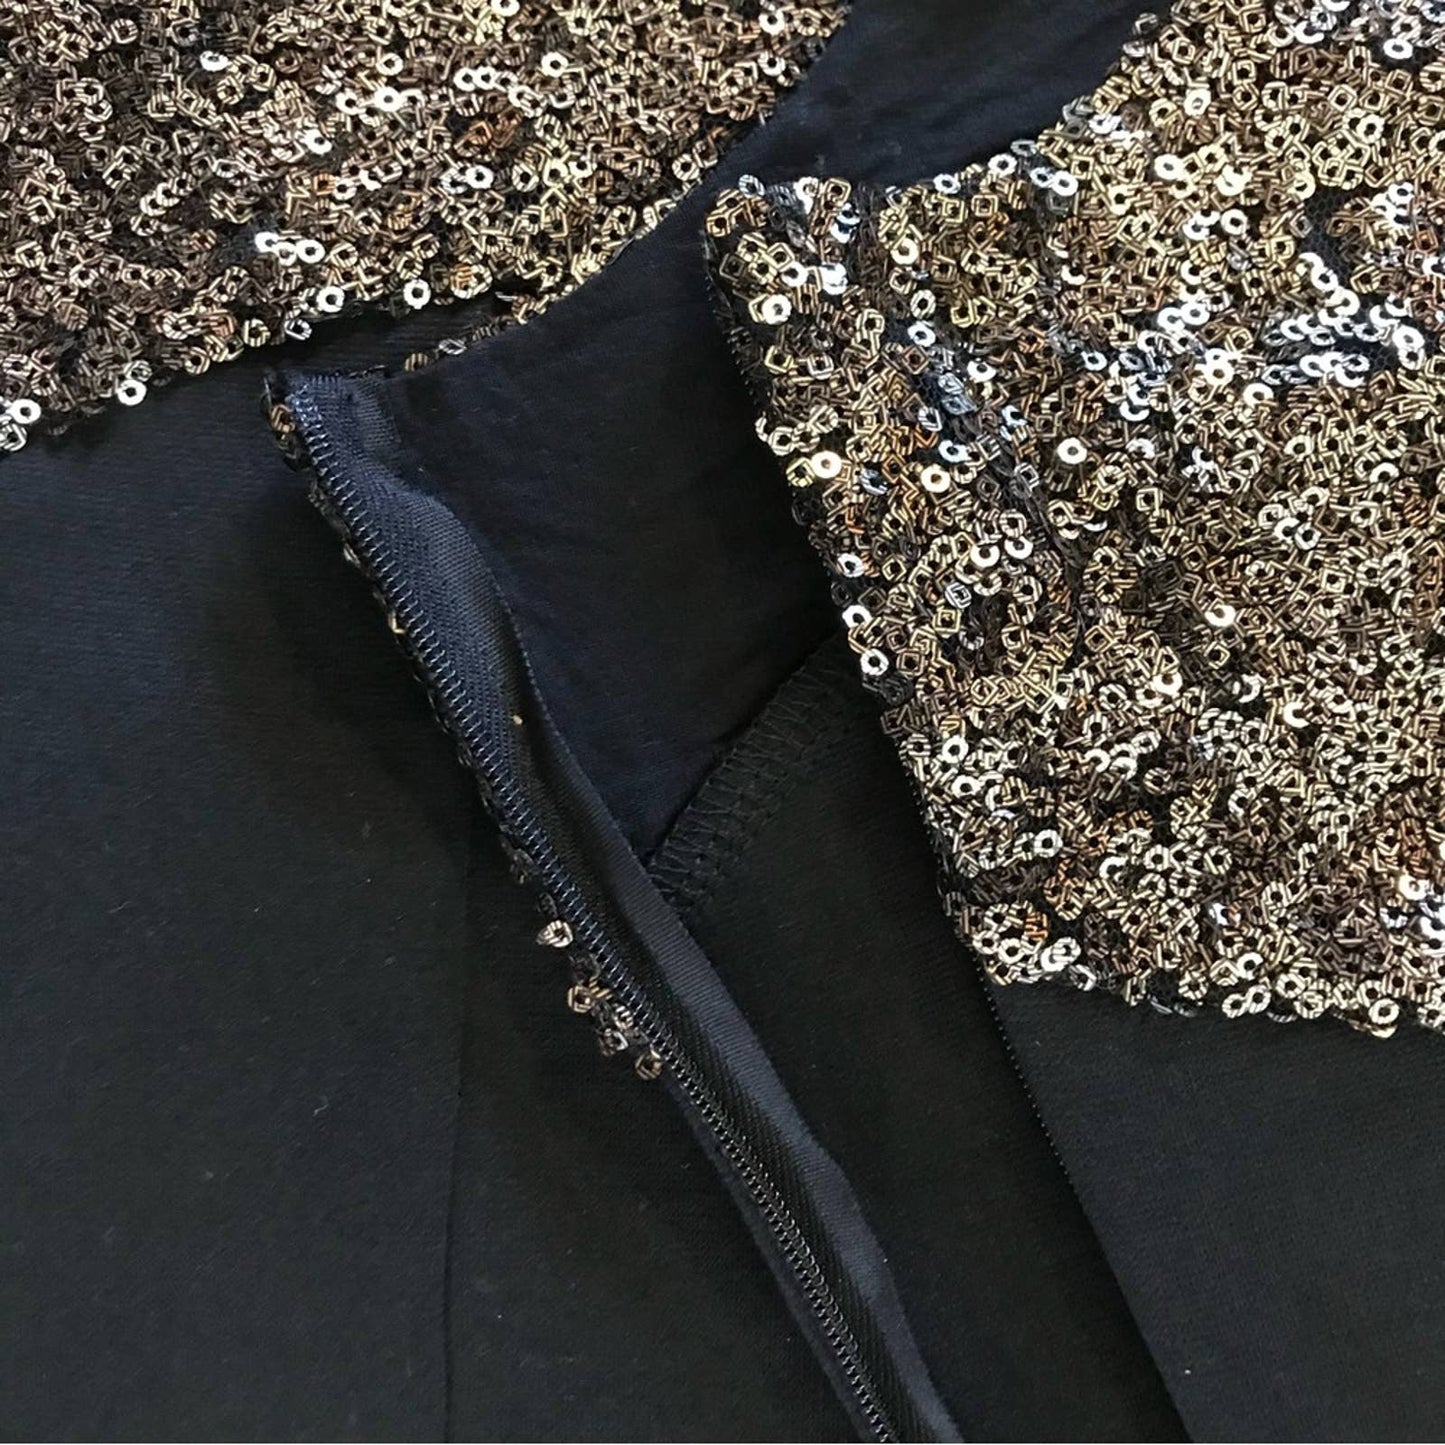 NWT OneTeaspoon Stoned Black Gold Sequin Bodycon Party NYE Holiday Dress Size XXS